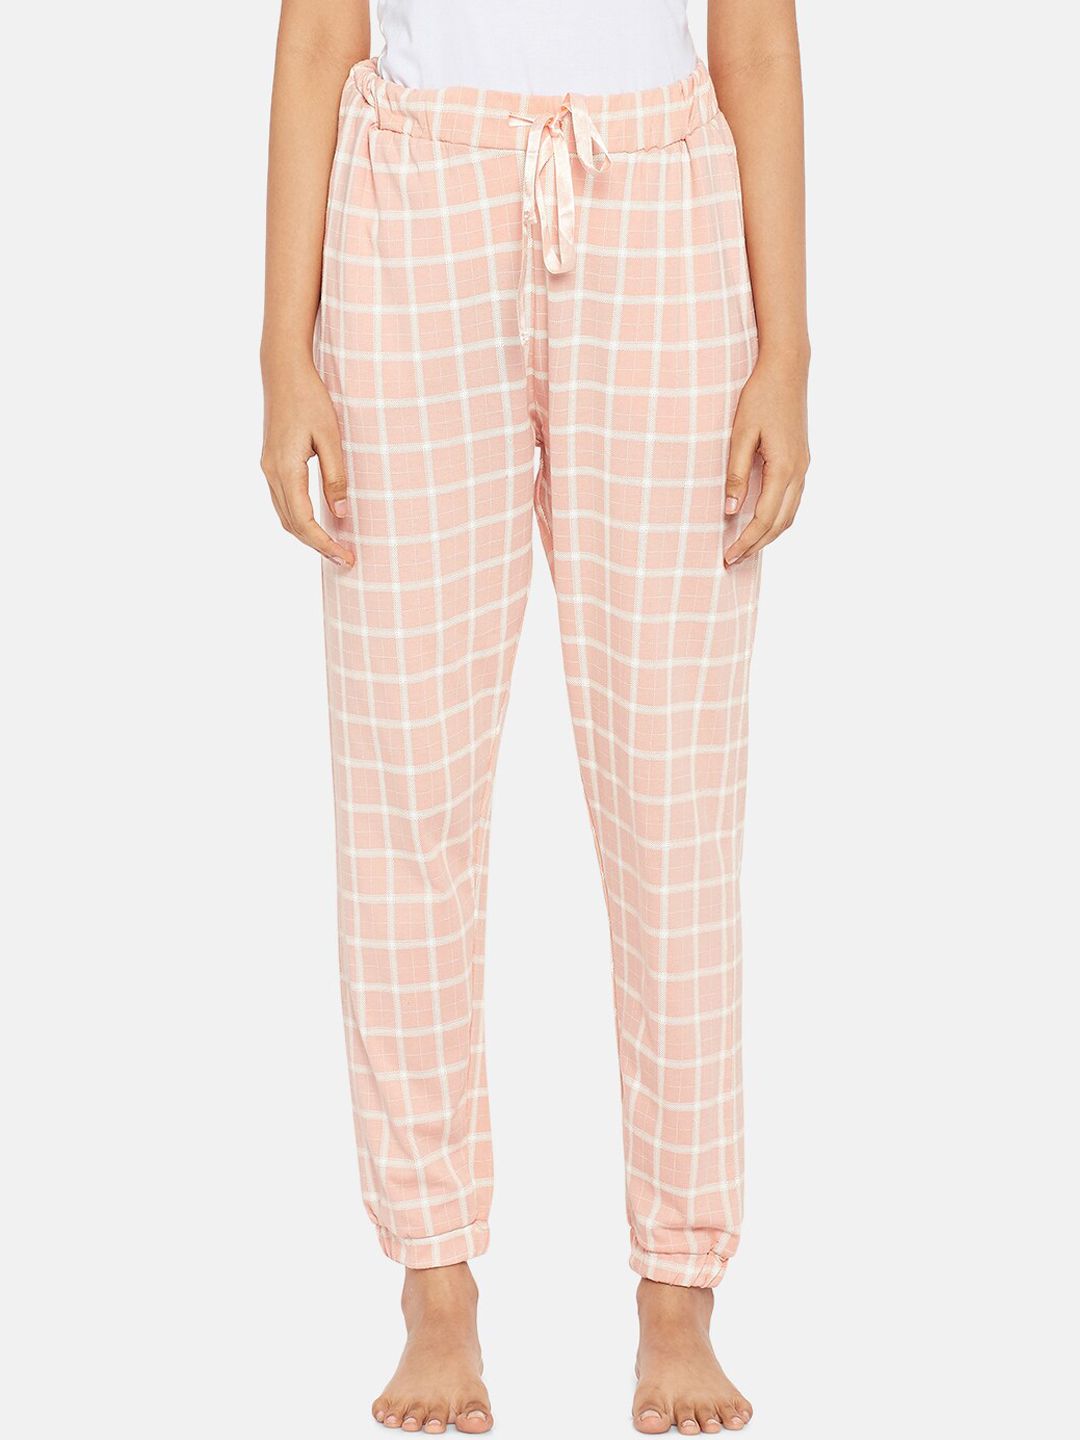 People Women Pink & White Cotton Printed Checked Pyjamas Price in India